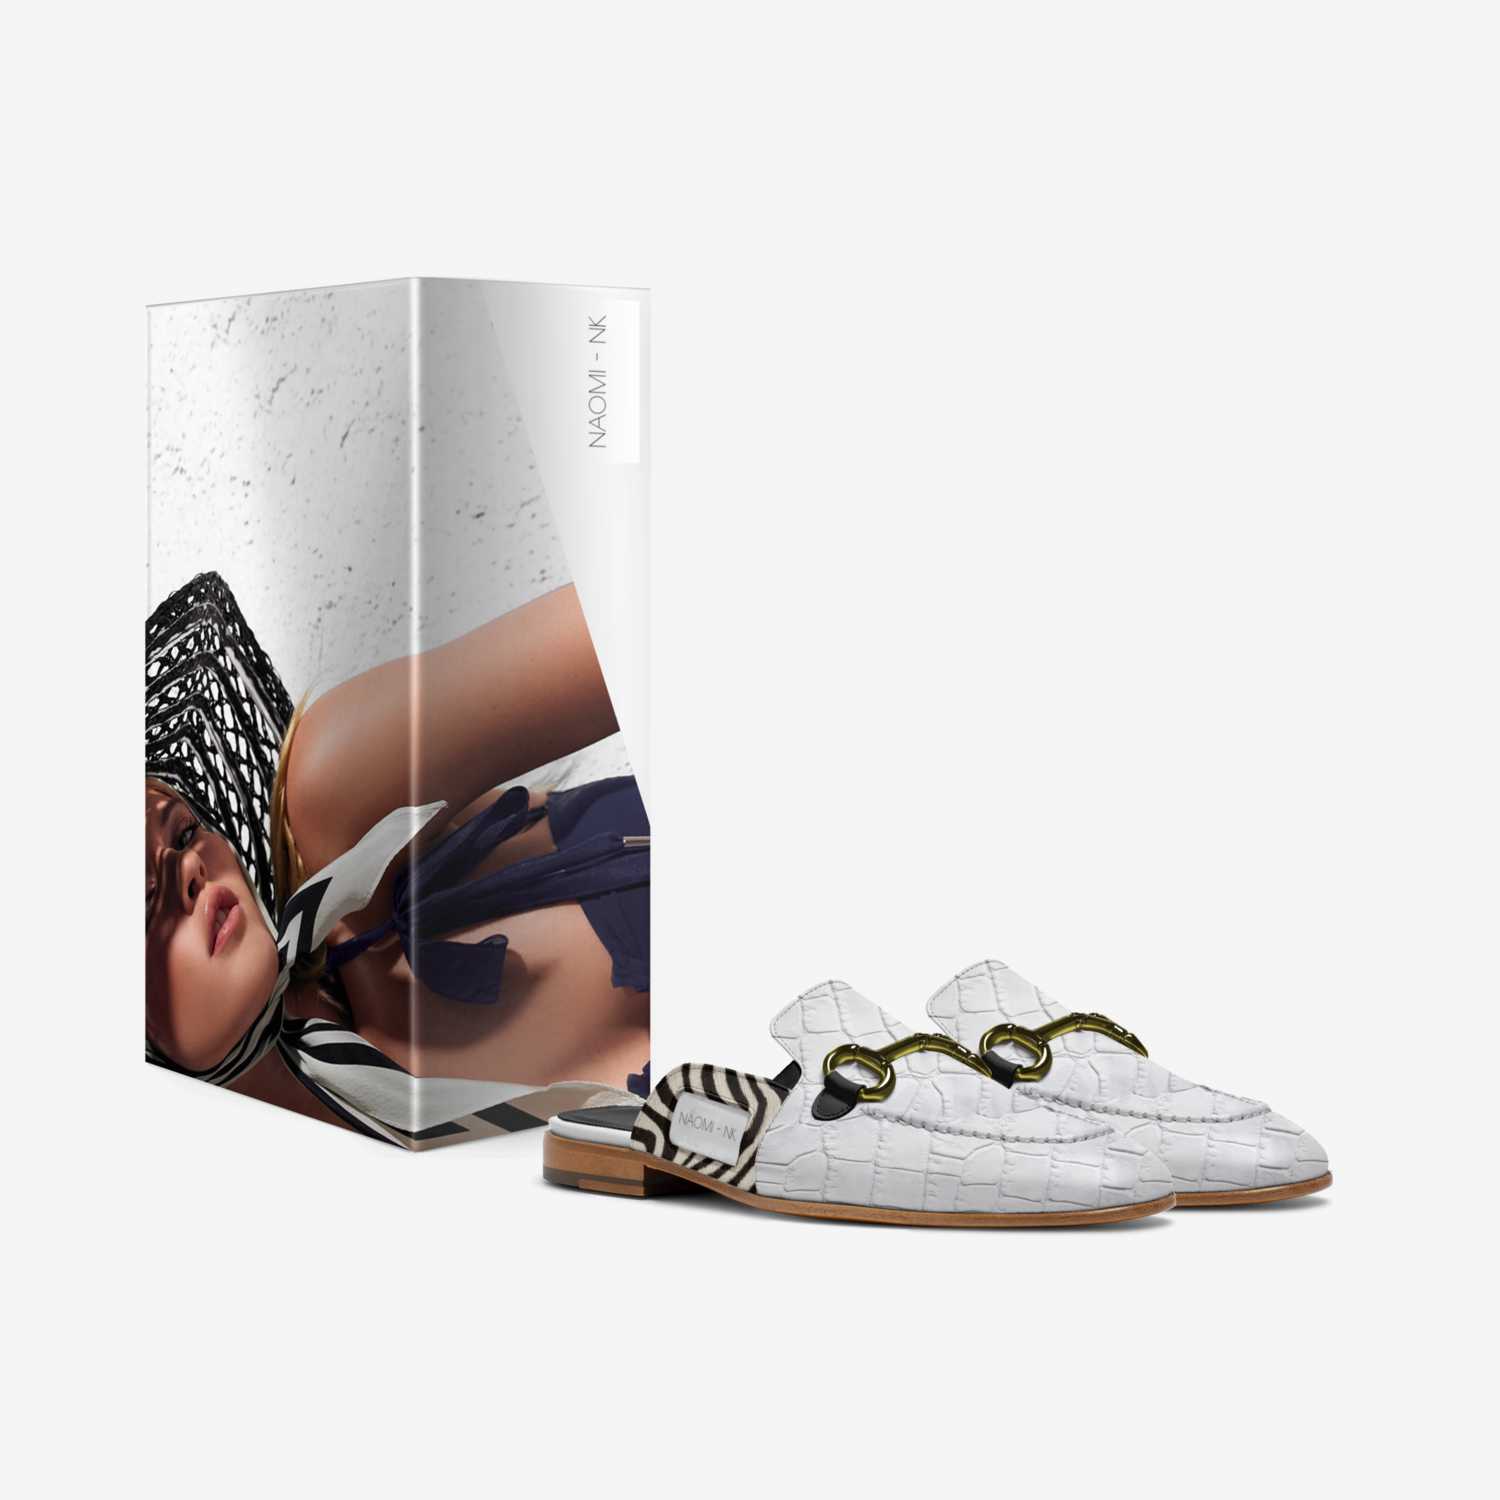 Naomi - NK custom made in Italy shoes by Nikita K | Box view